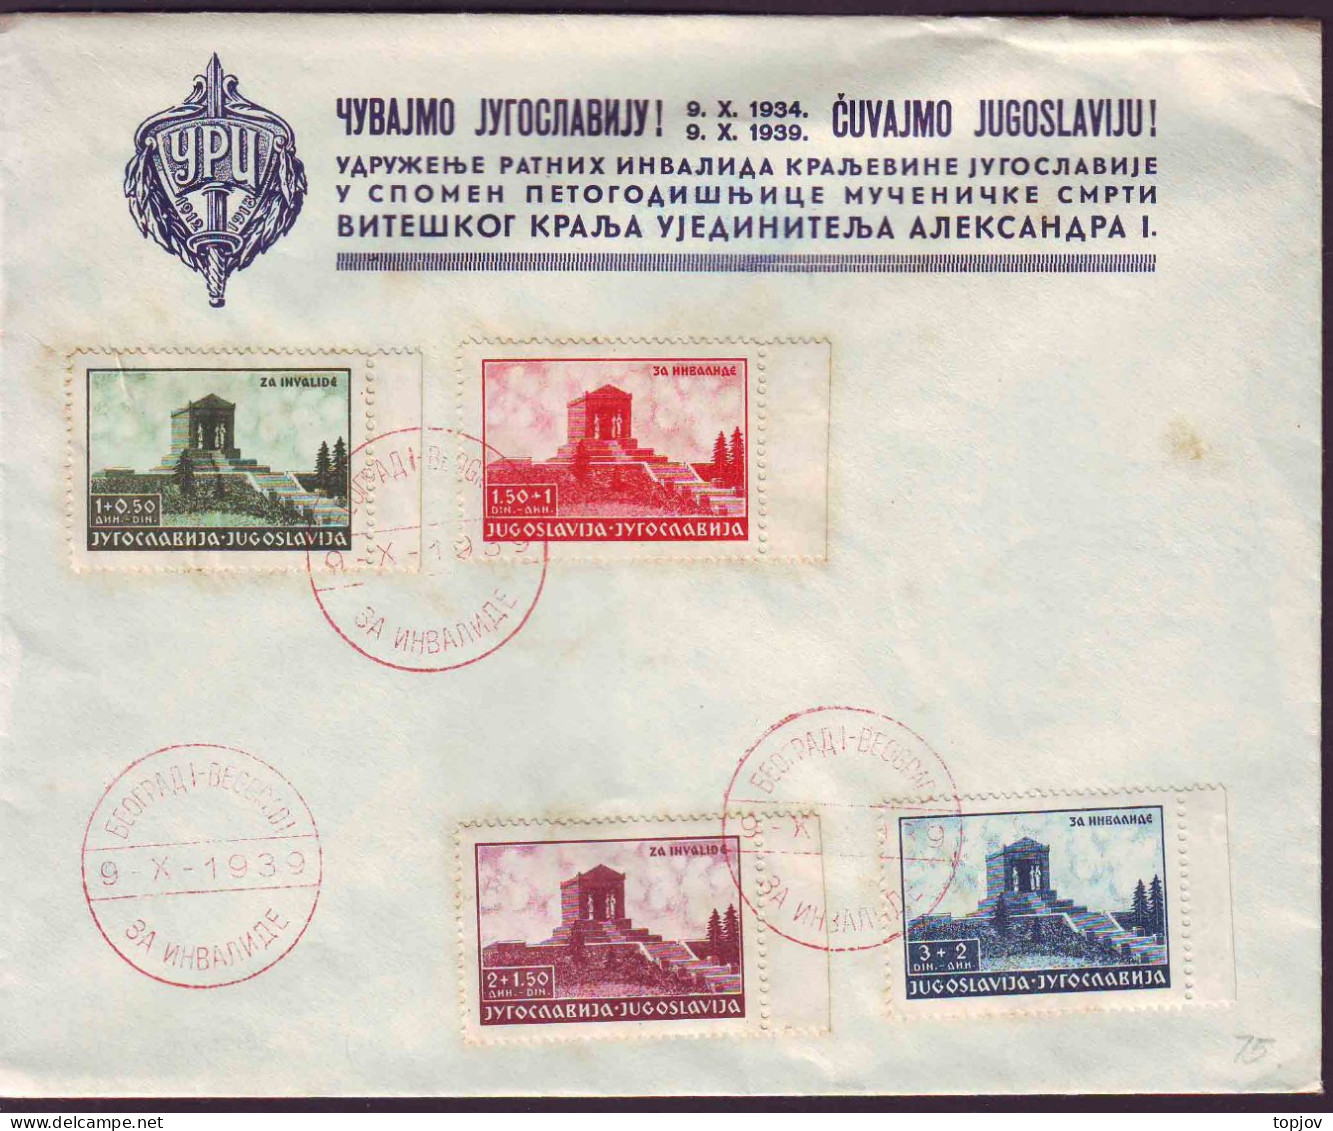 JUGOSLAVIA - CHAPEL FOR THE UNKNOWN HERO  AVALA  WW1 - FDC - 1939 - FDC